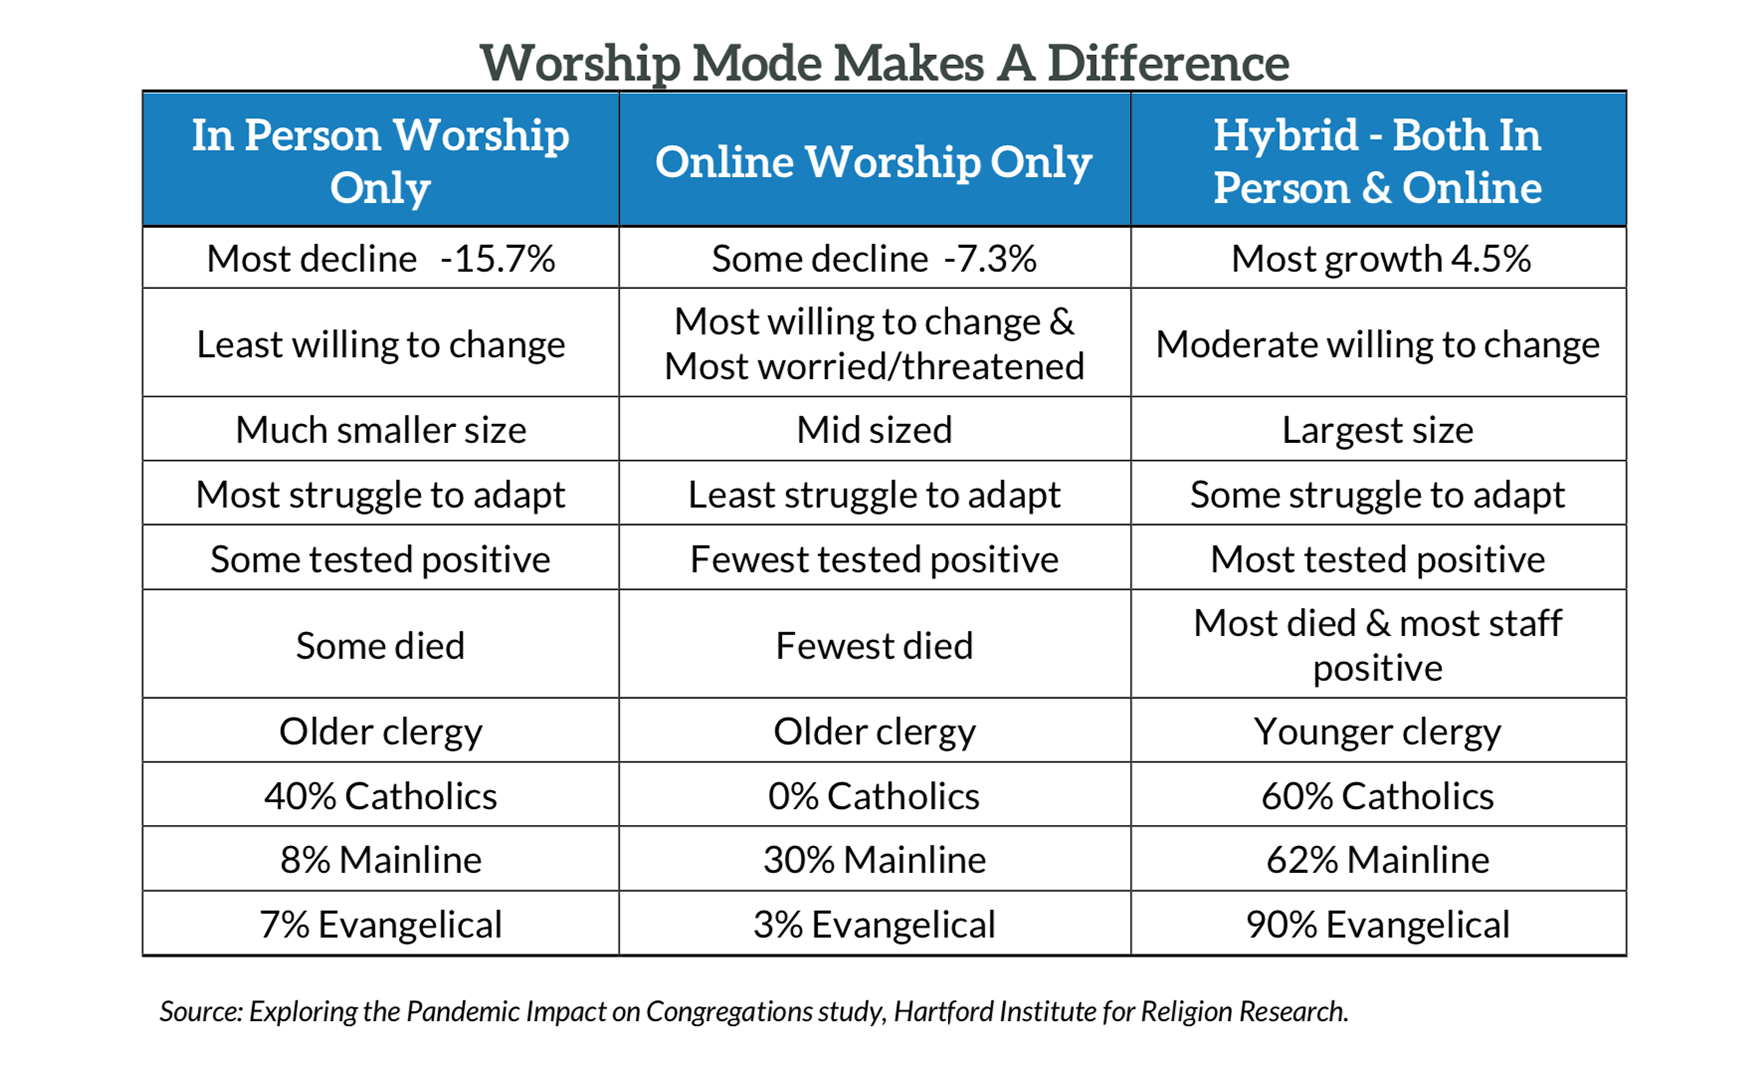 Hybrid worship shows growth during pandemic.